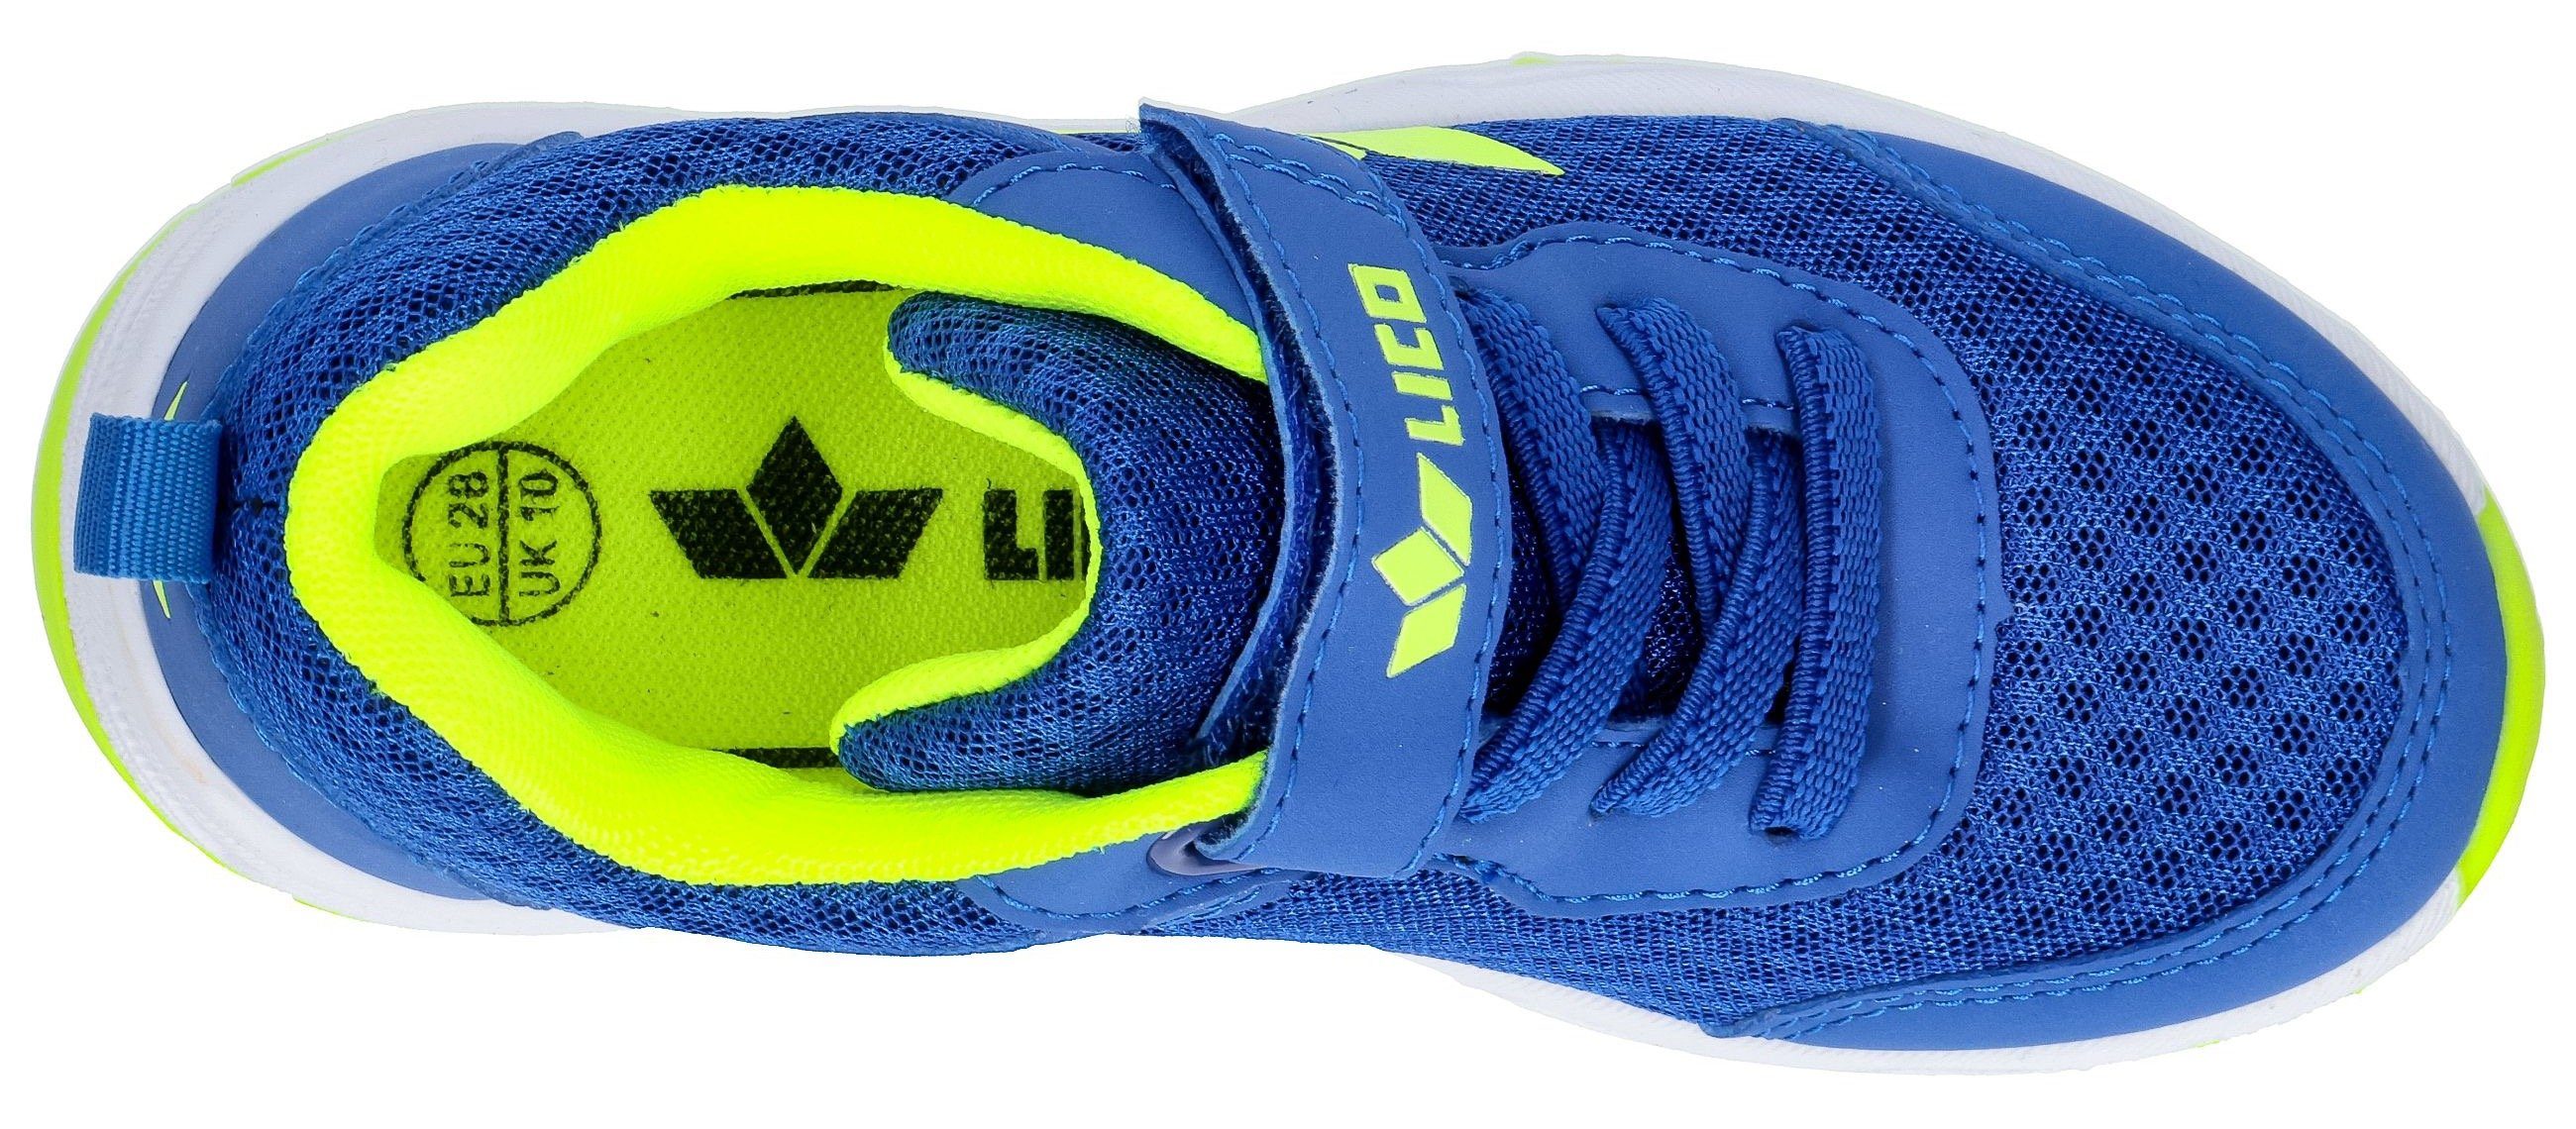 Lico Mika VS Wechselfußbett blau/lemon mit WMS Sneaker